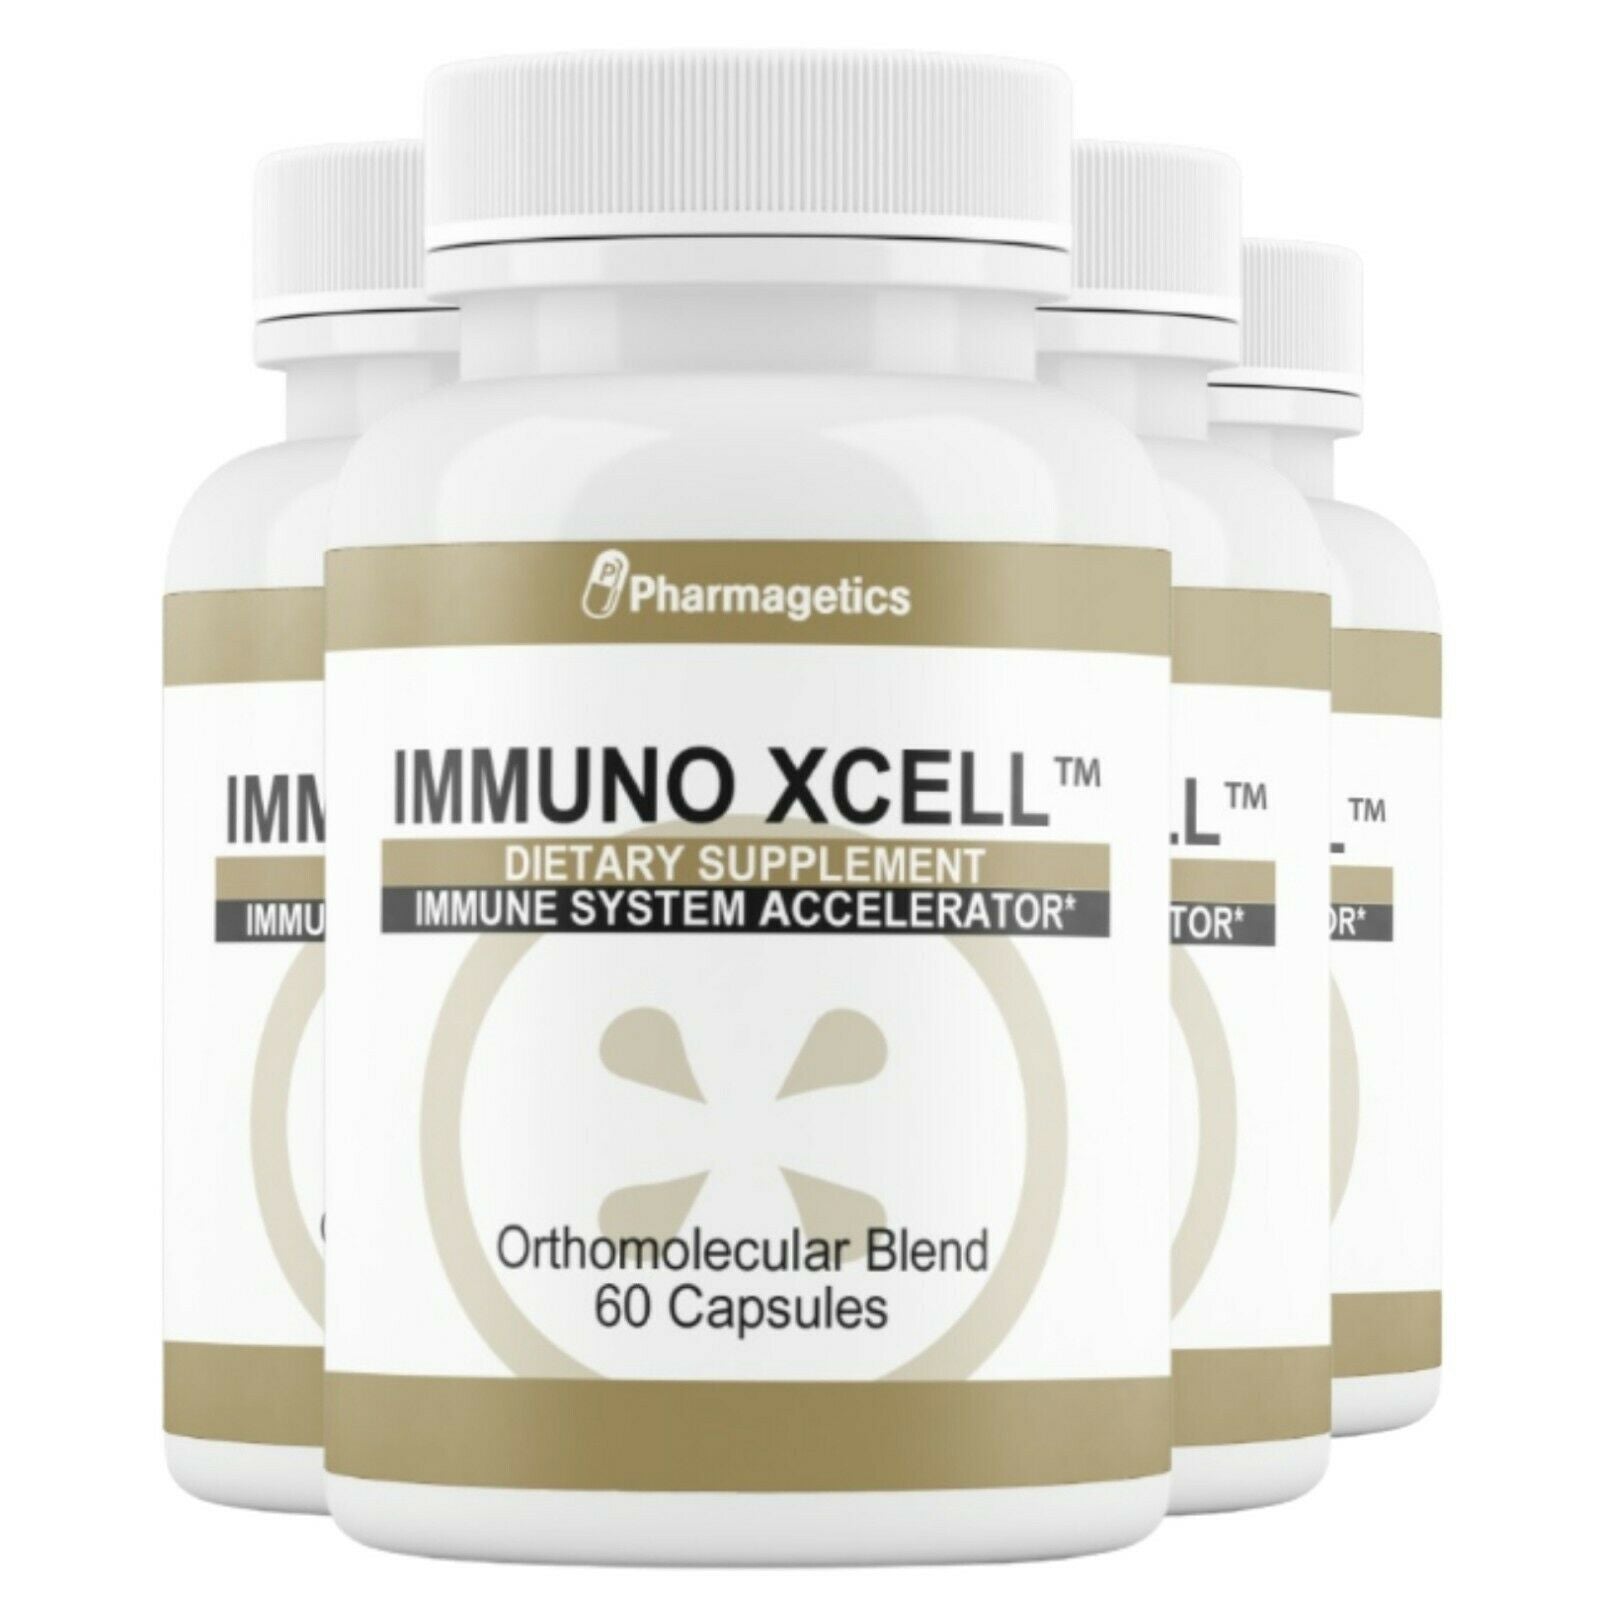 4 IMMUNO XCELL - Dietary Supplement -  60 Capsules - 240 Capsules - 4 Bottles